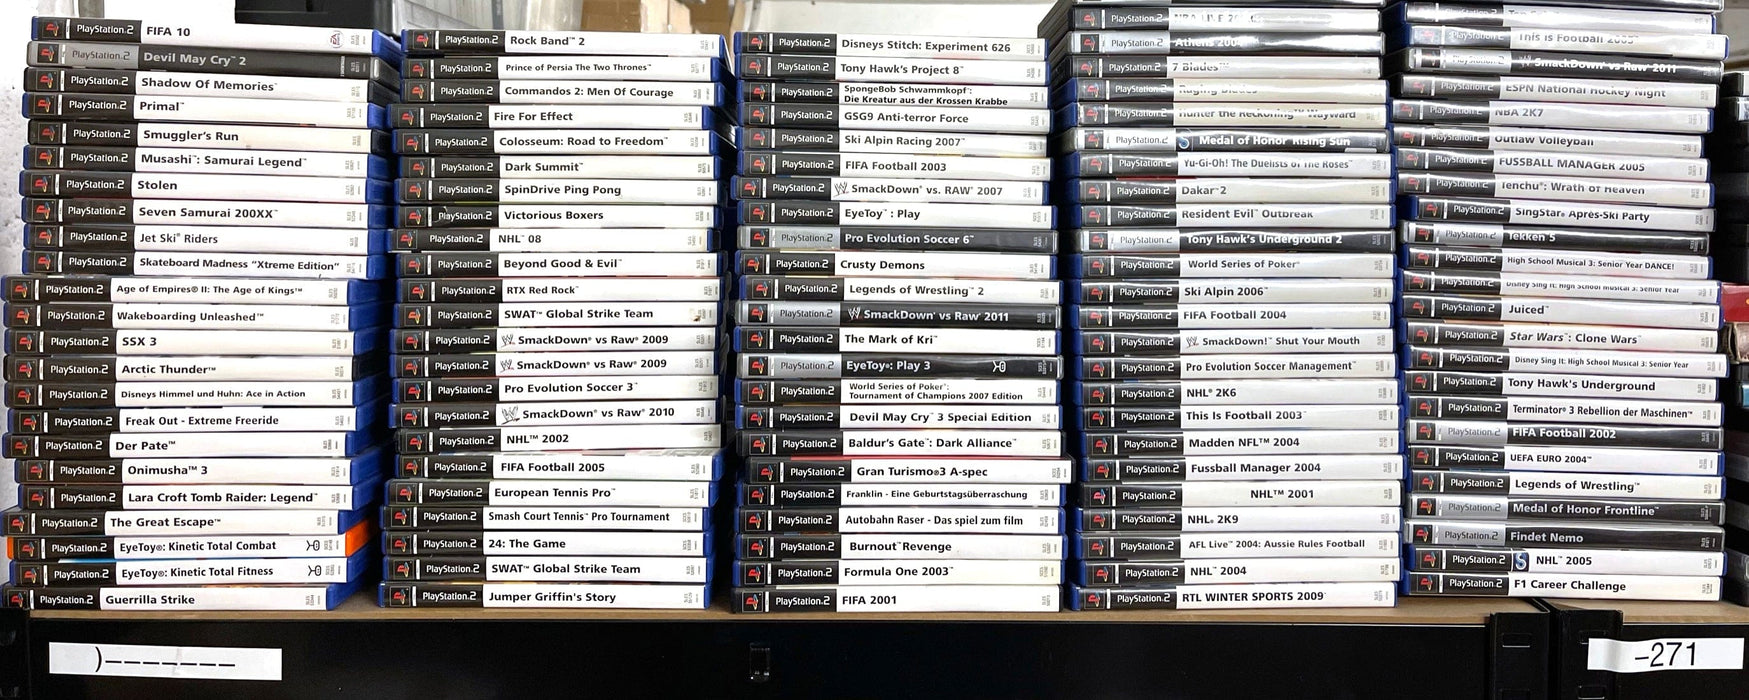 Glaciergames PlayStation 2 Game Tom Clancy's Splinter Cell - Pandora Tomorrow (Platinum) PlayStation 2 (Nr.461)